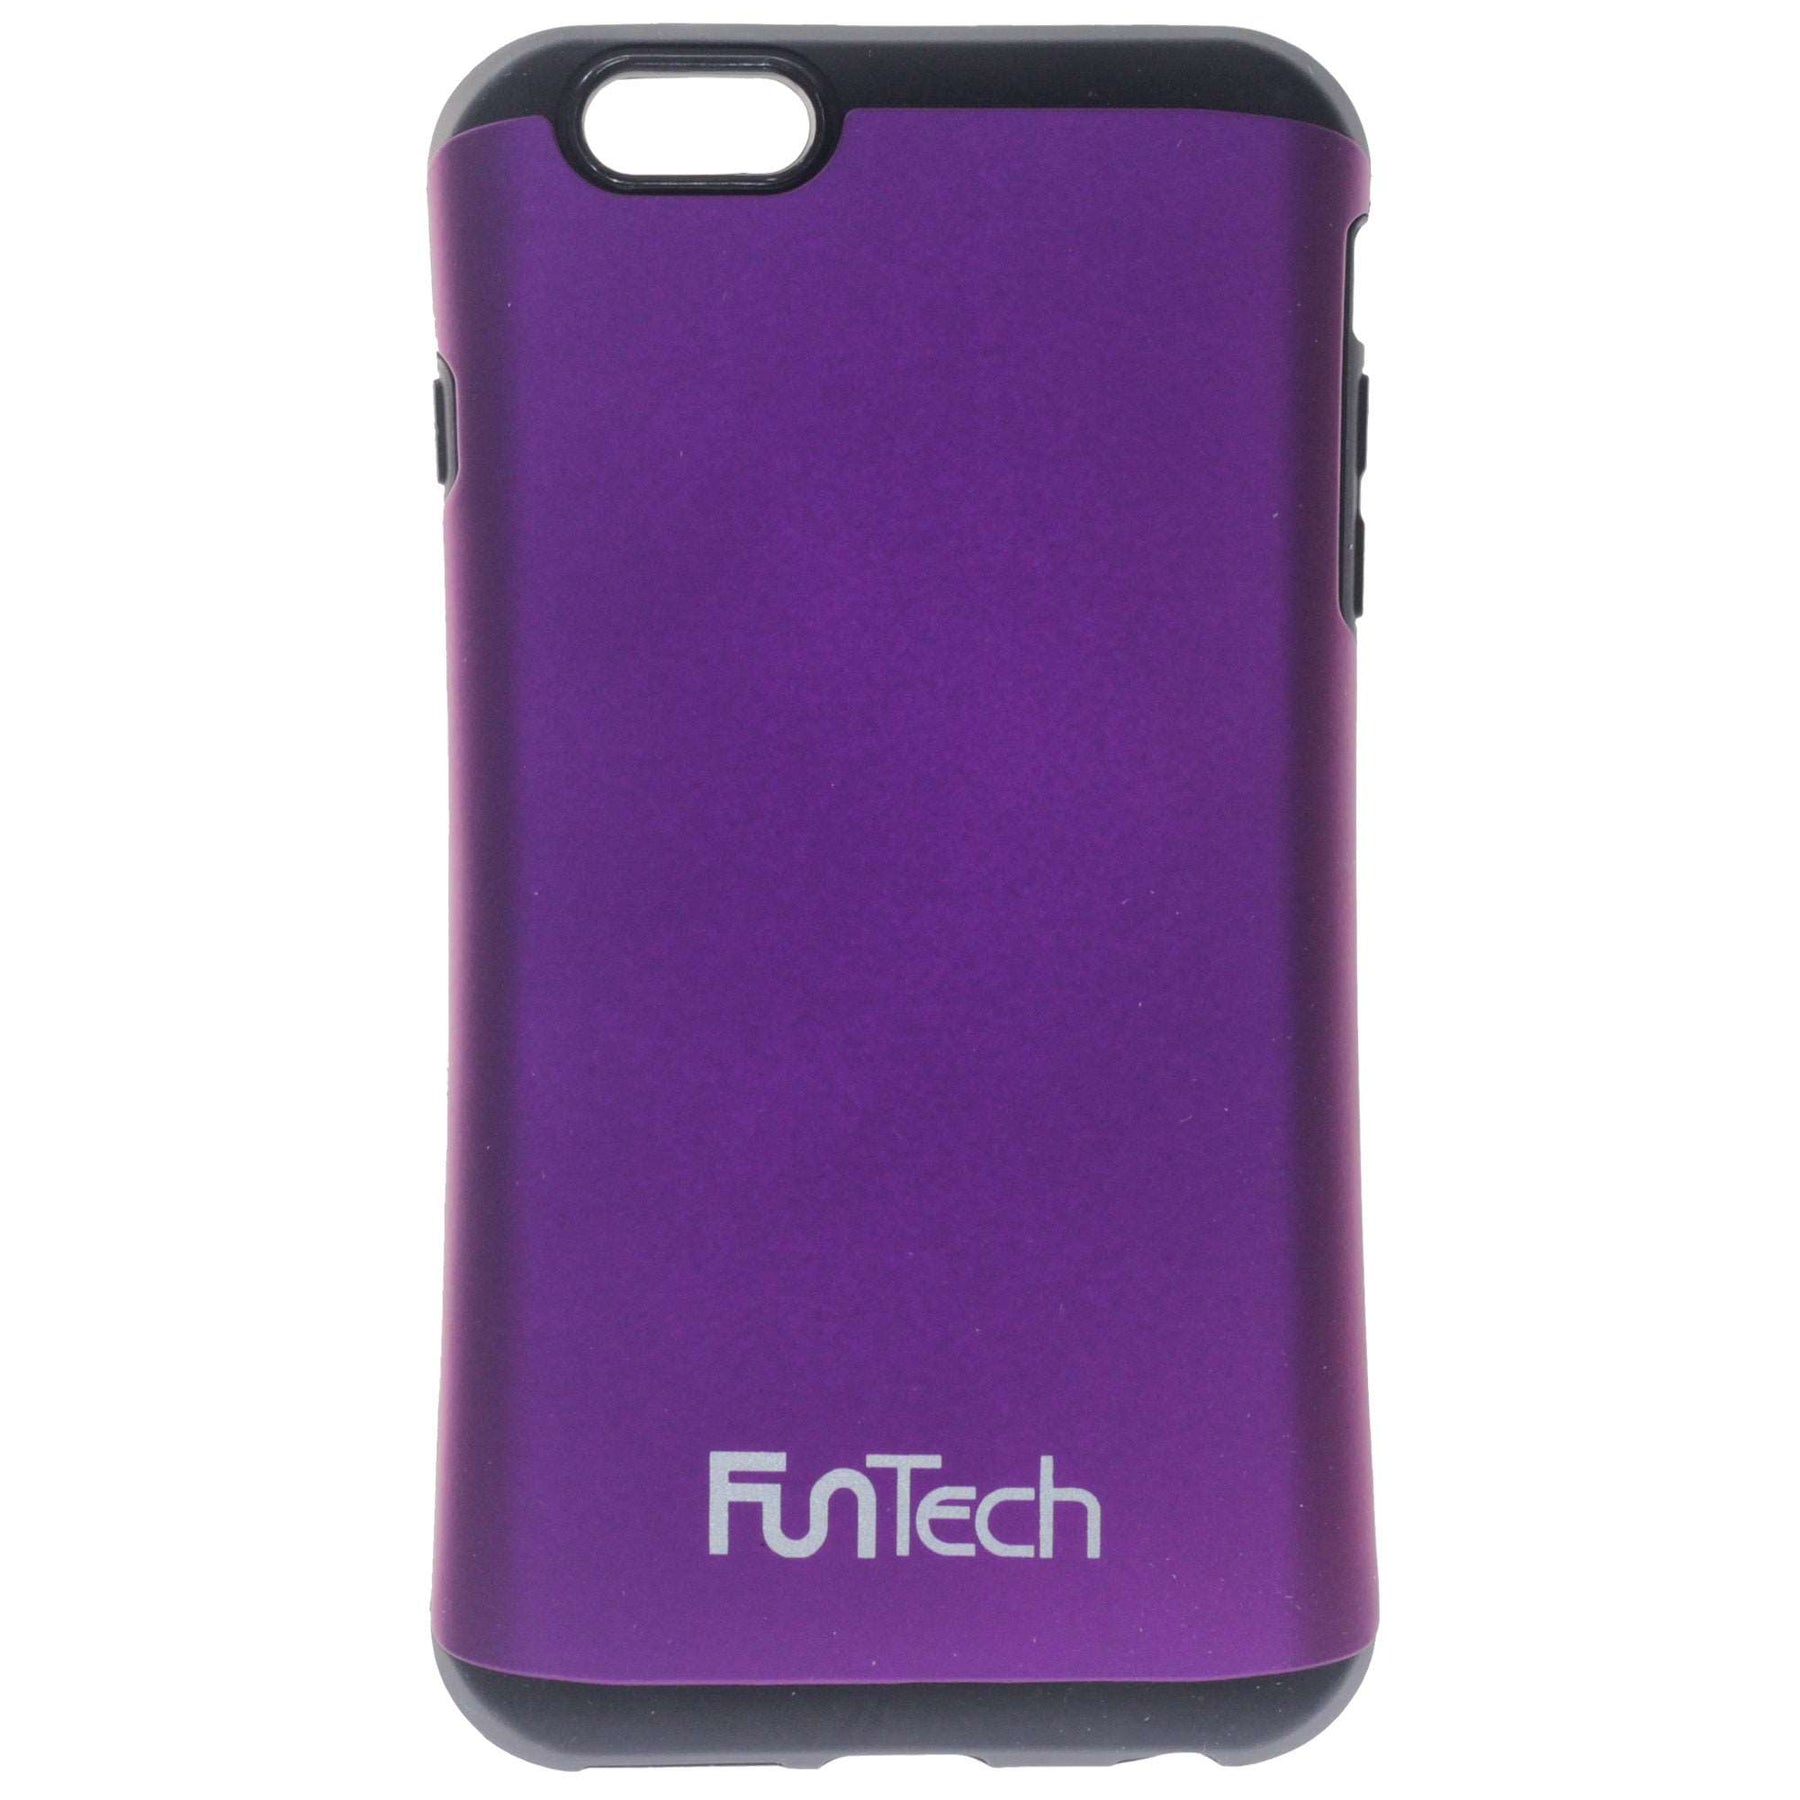 iPhone 6/6s purple case